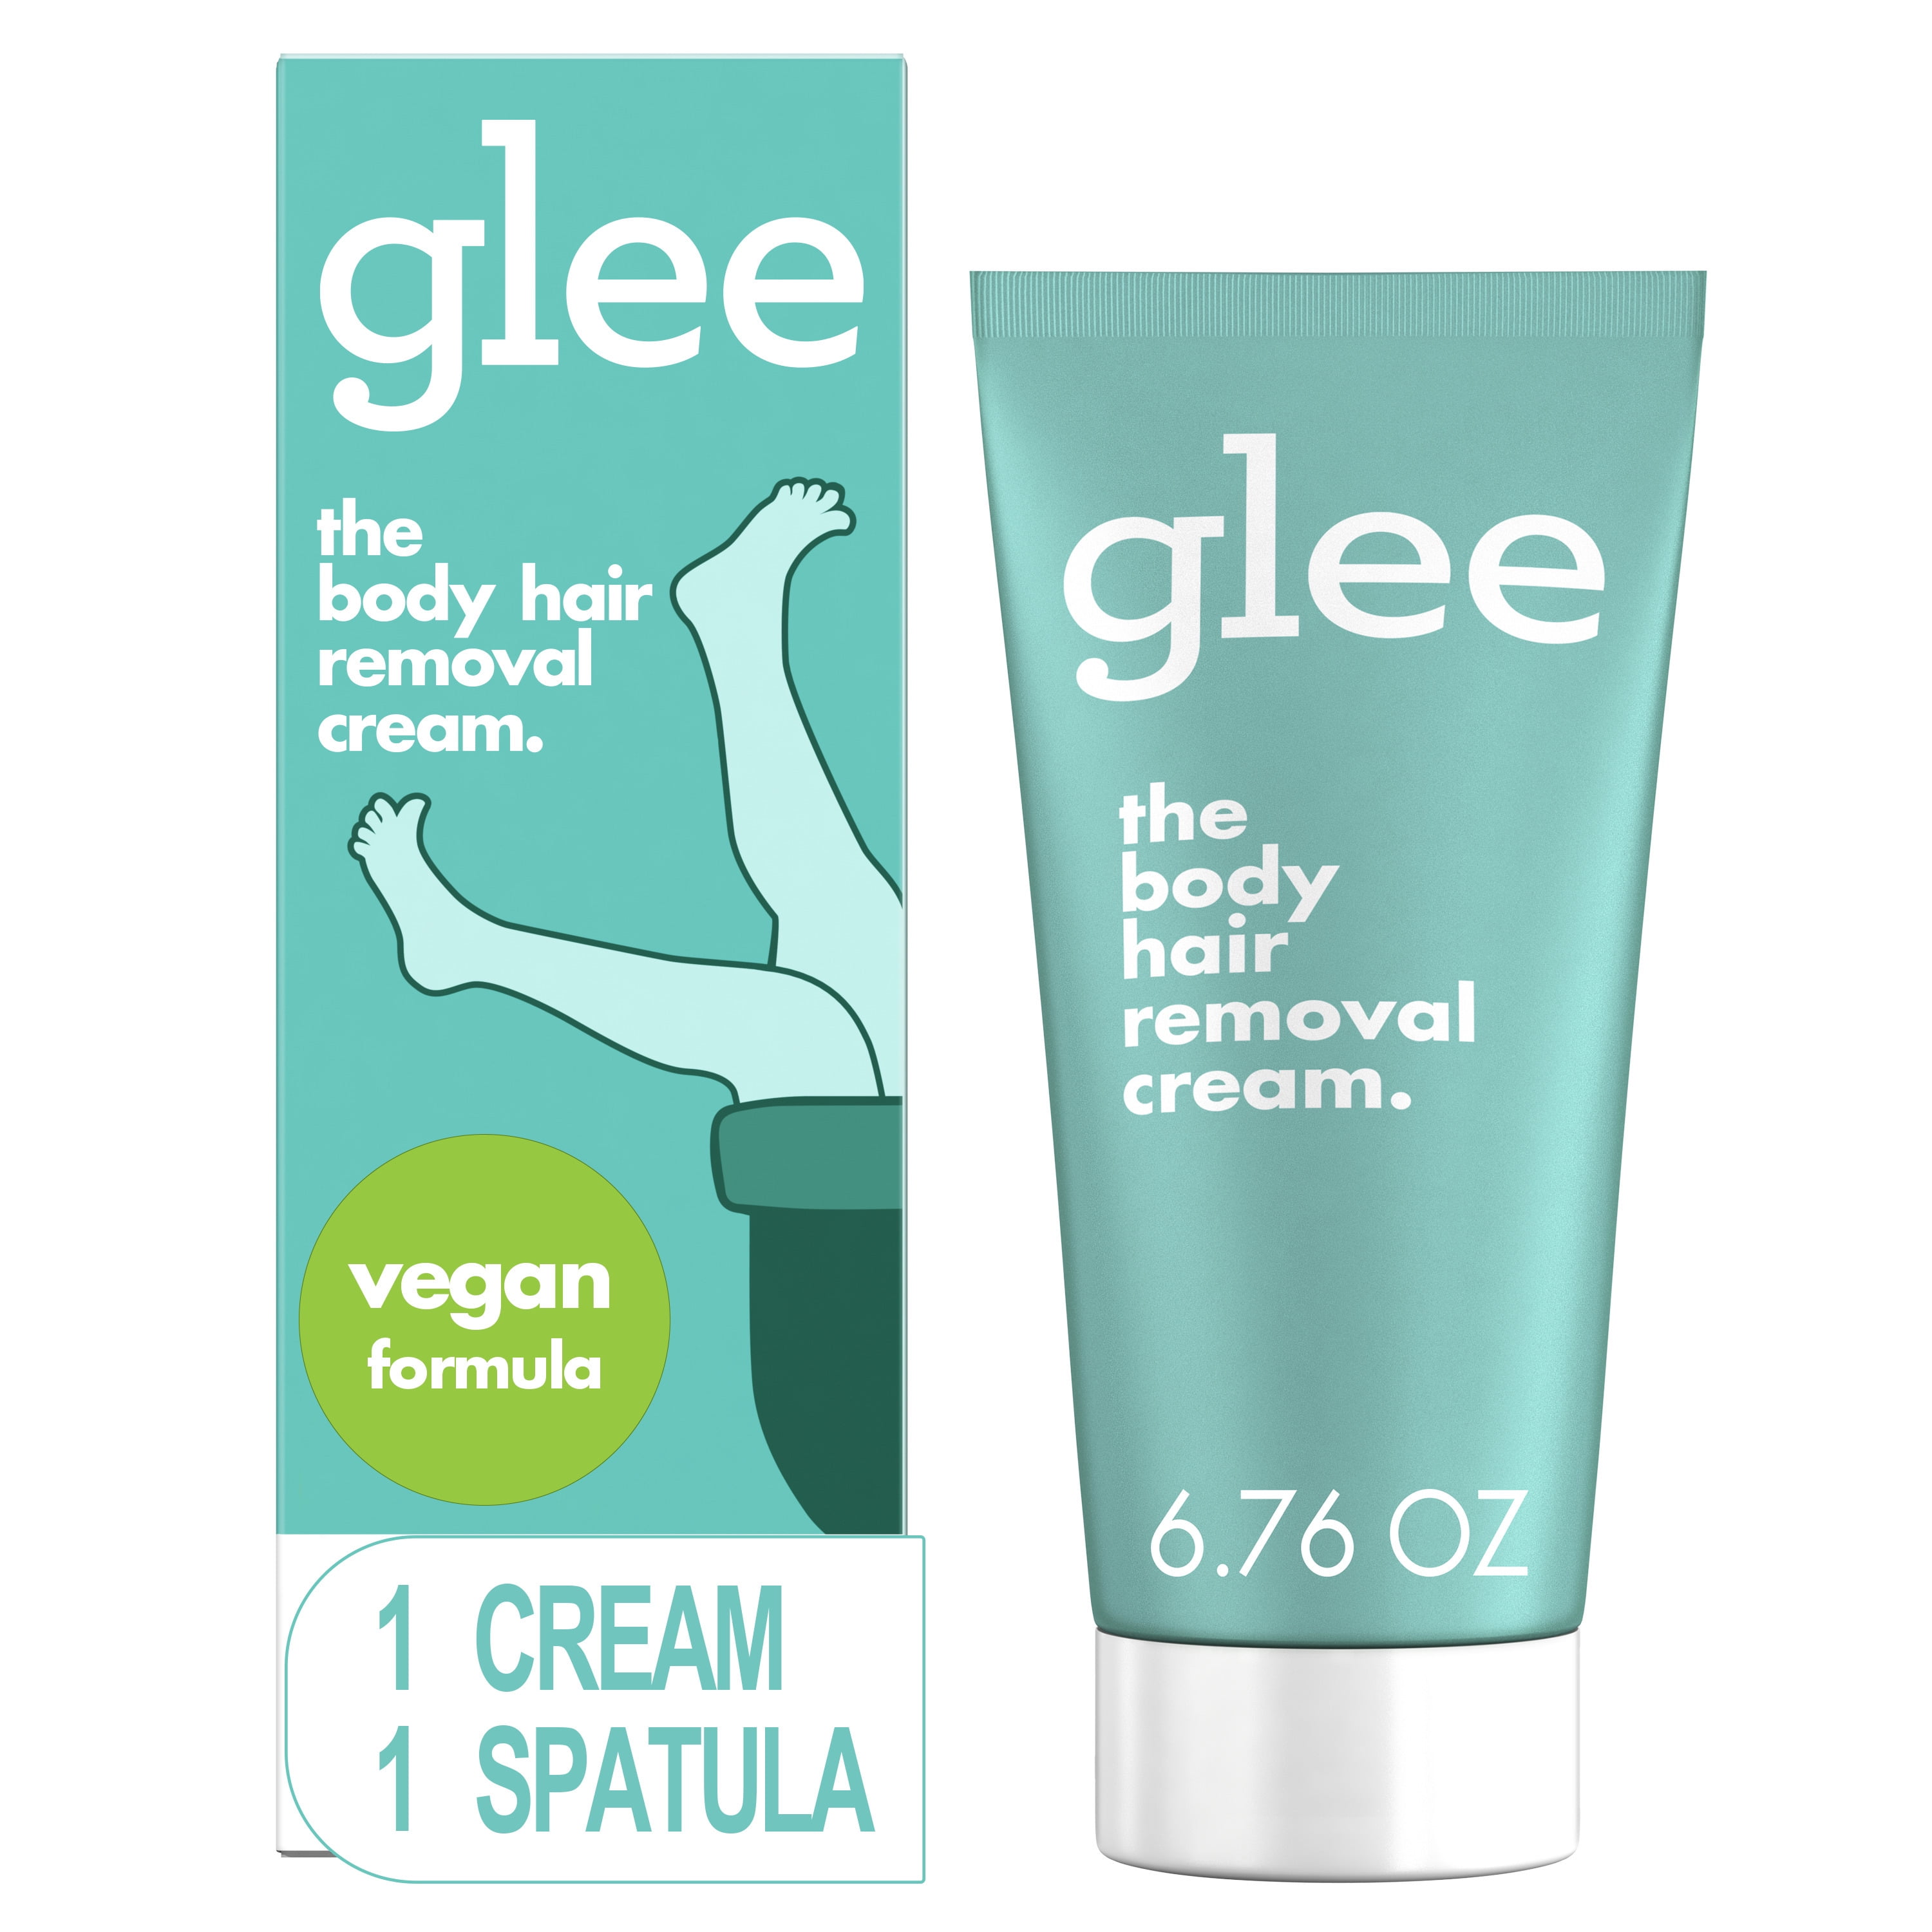 Glee Women's Body Hair Removal Cream, Depilatory Kit, Honey Melon Scent  200ml, One Spatula 